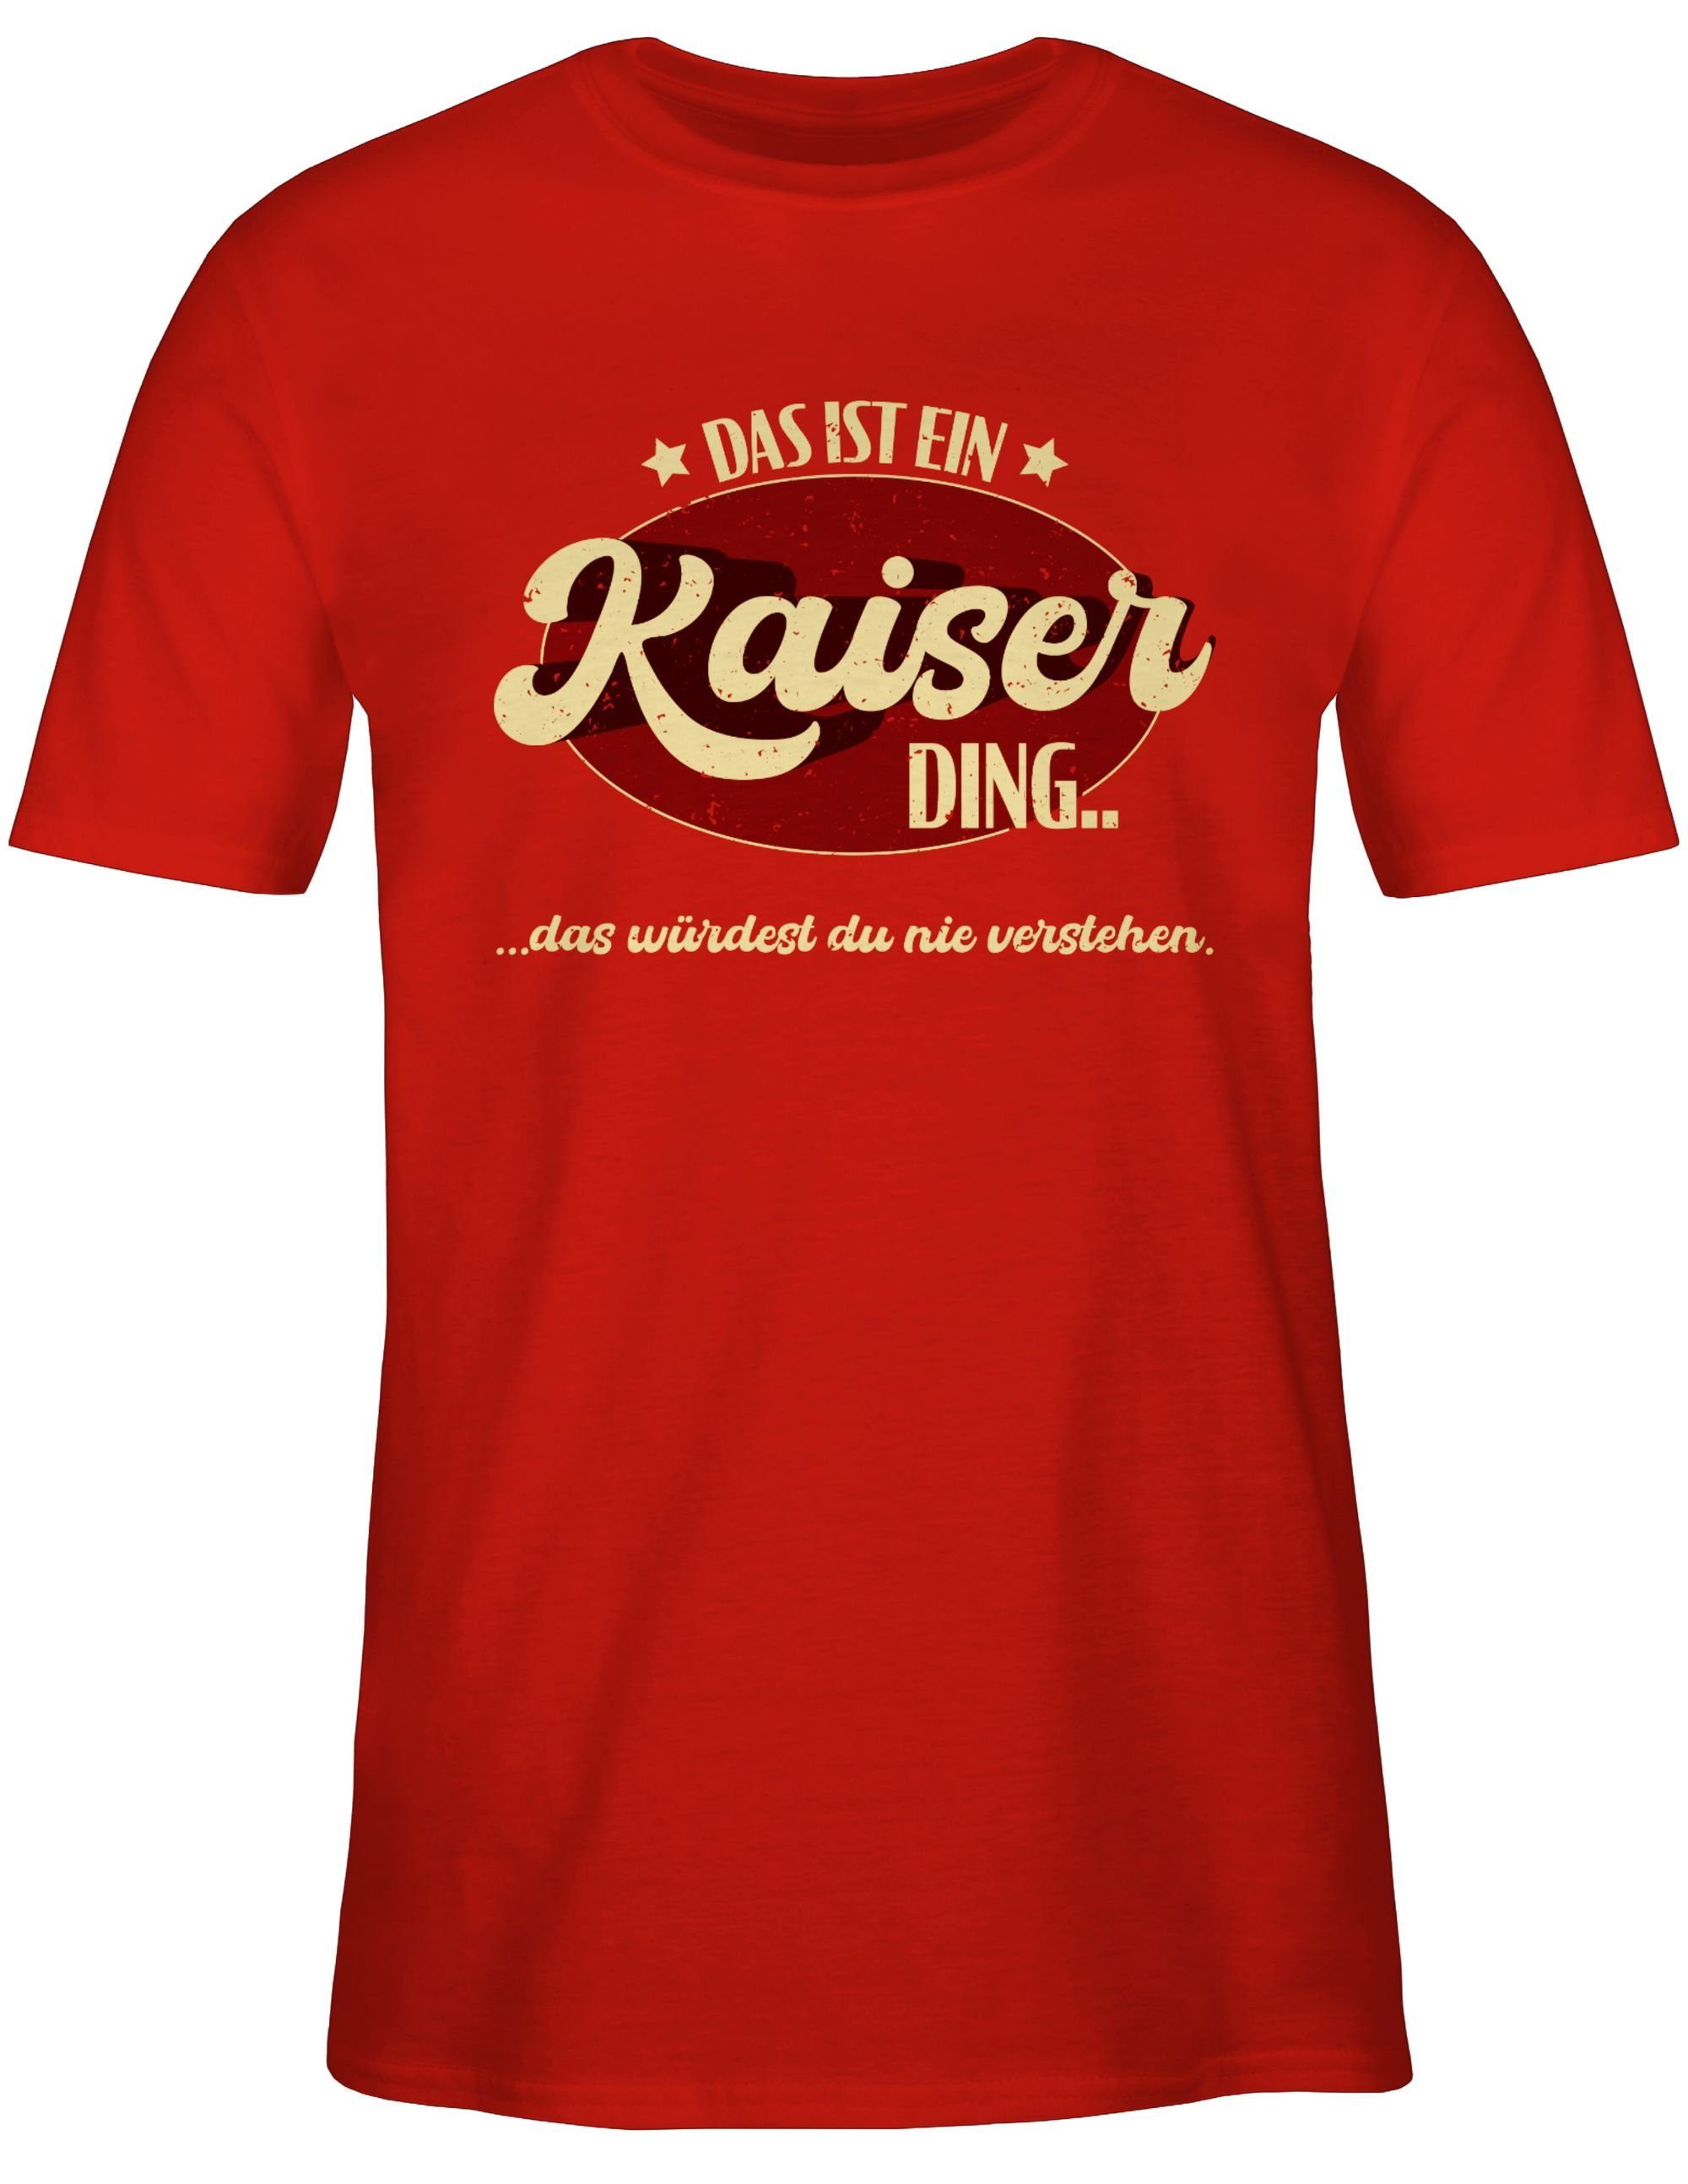 Shirtracer T-Shirt Rot ist Schlager Kaiser - ein Kaiserding 03 Ding Outfit Party Das